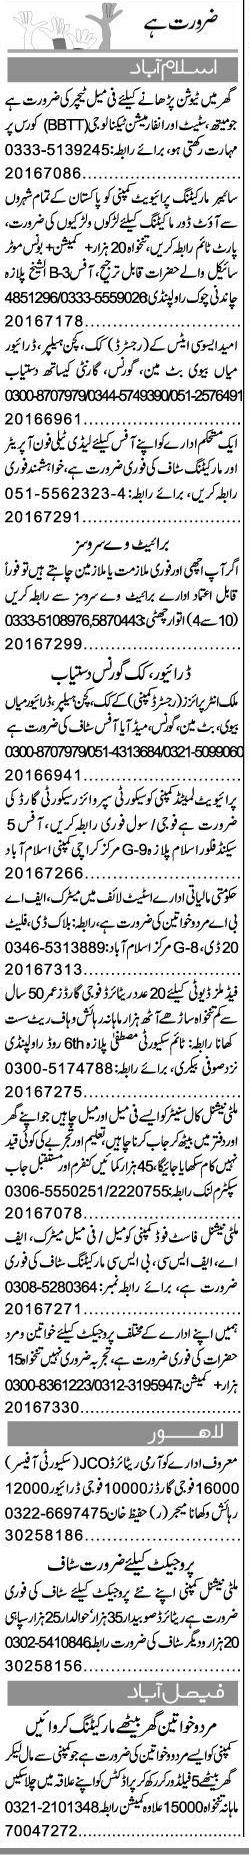 Misc. Jobs in Islamabad/Rawalpindi Classified